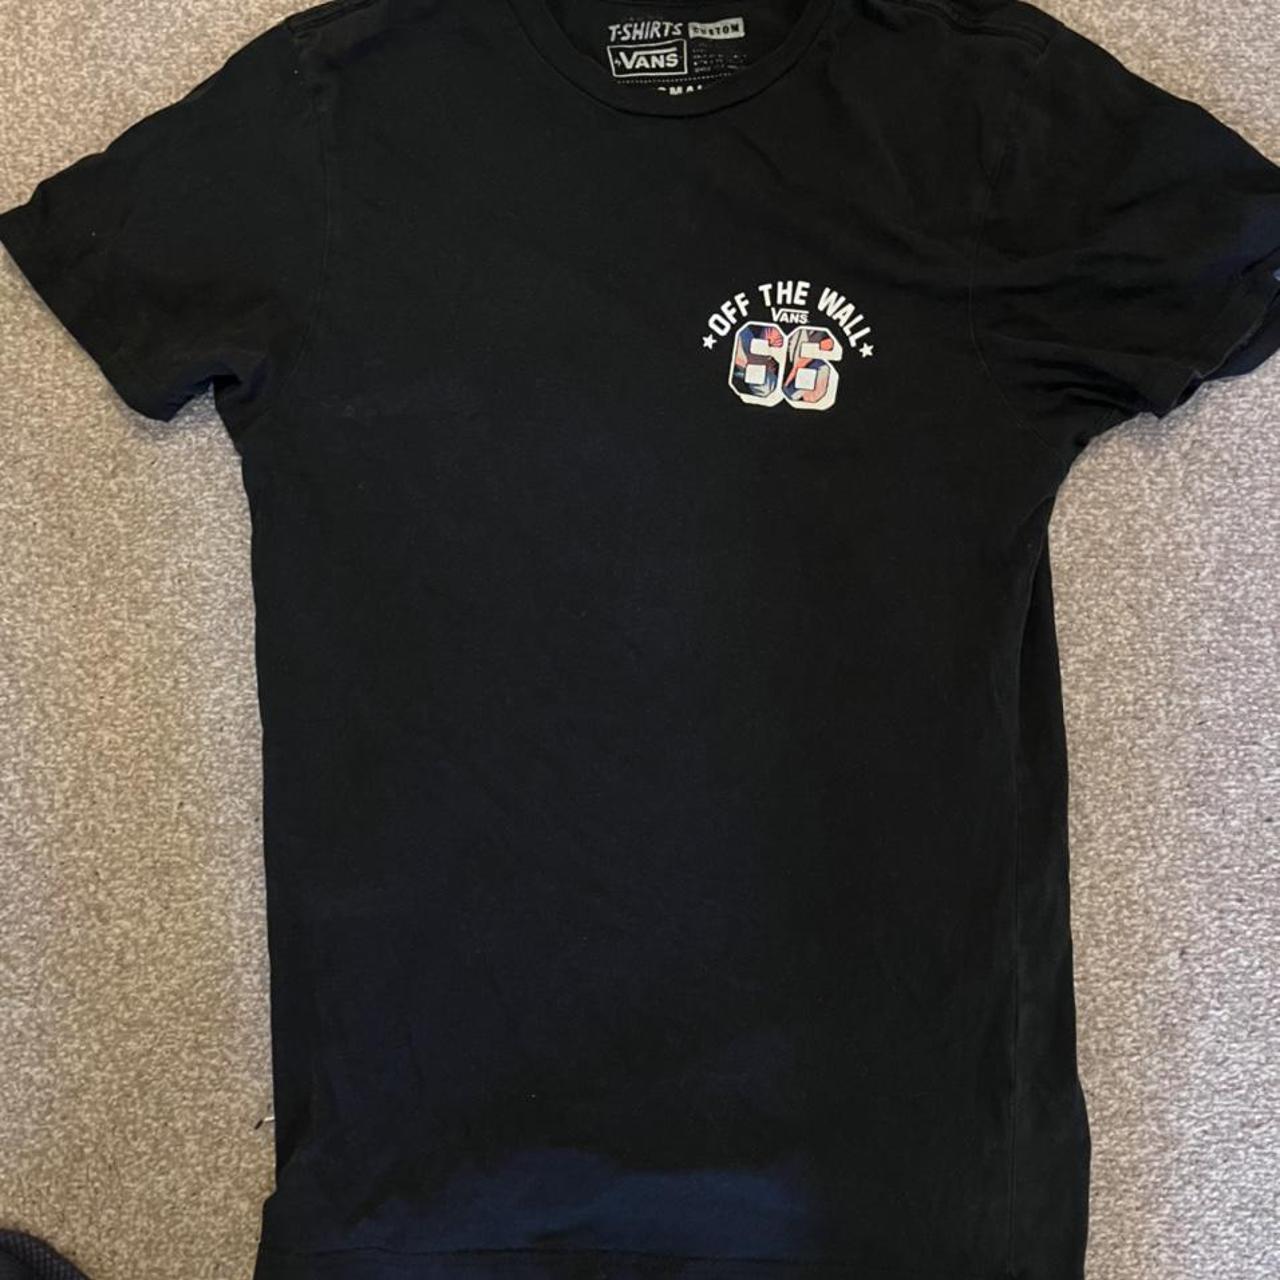 Vans Men's Black T-shirt | Depop